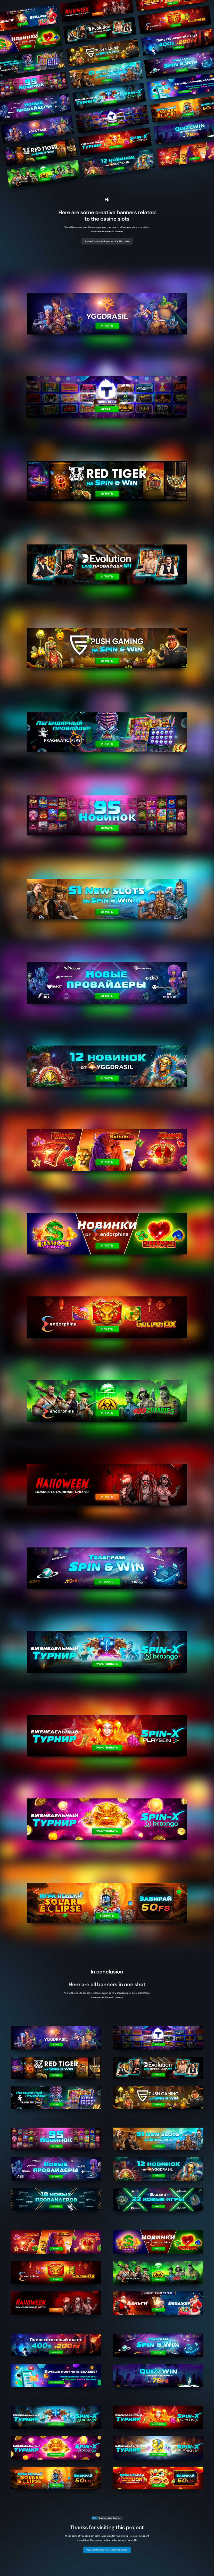 banner banner design casino Casino Game Casino Online game slot social media Web Banner Web Banners